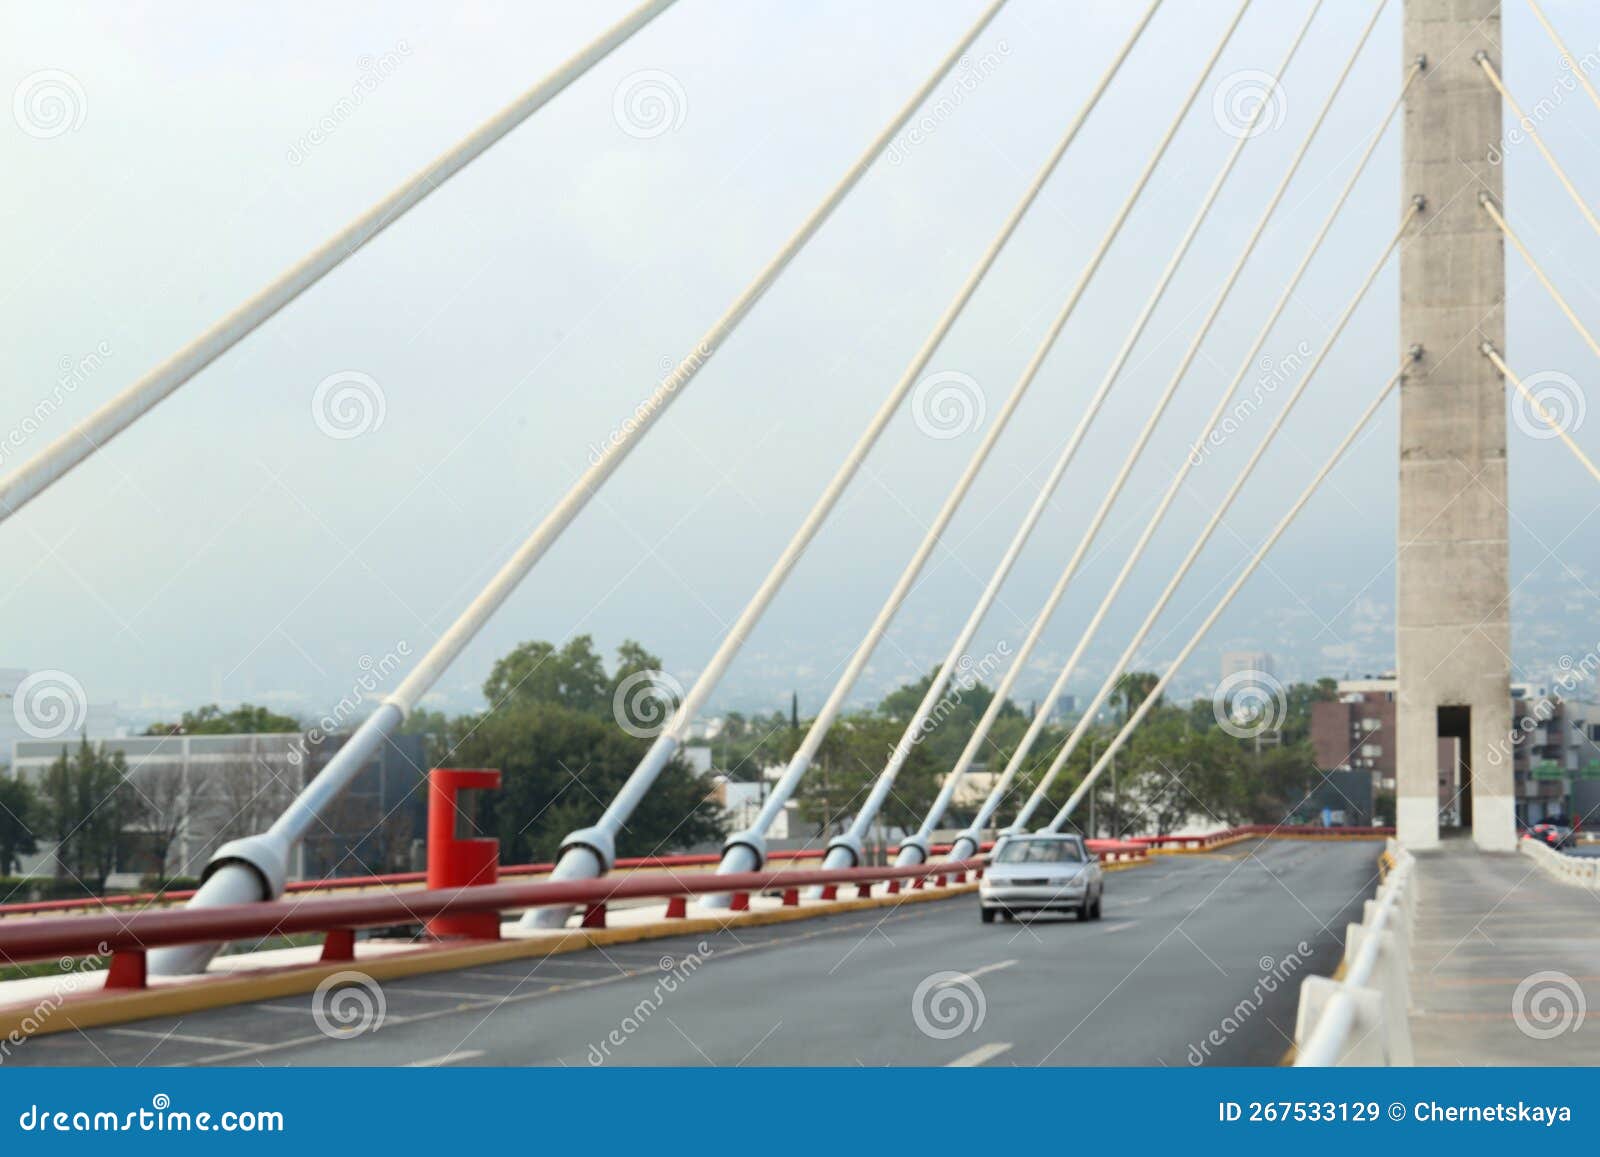 beautiful view of modern bridge with asphalt road